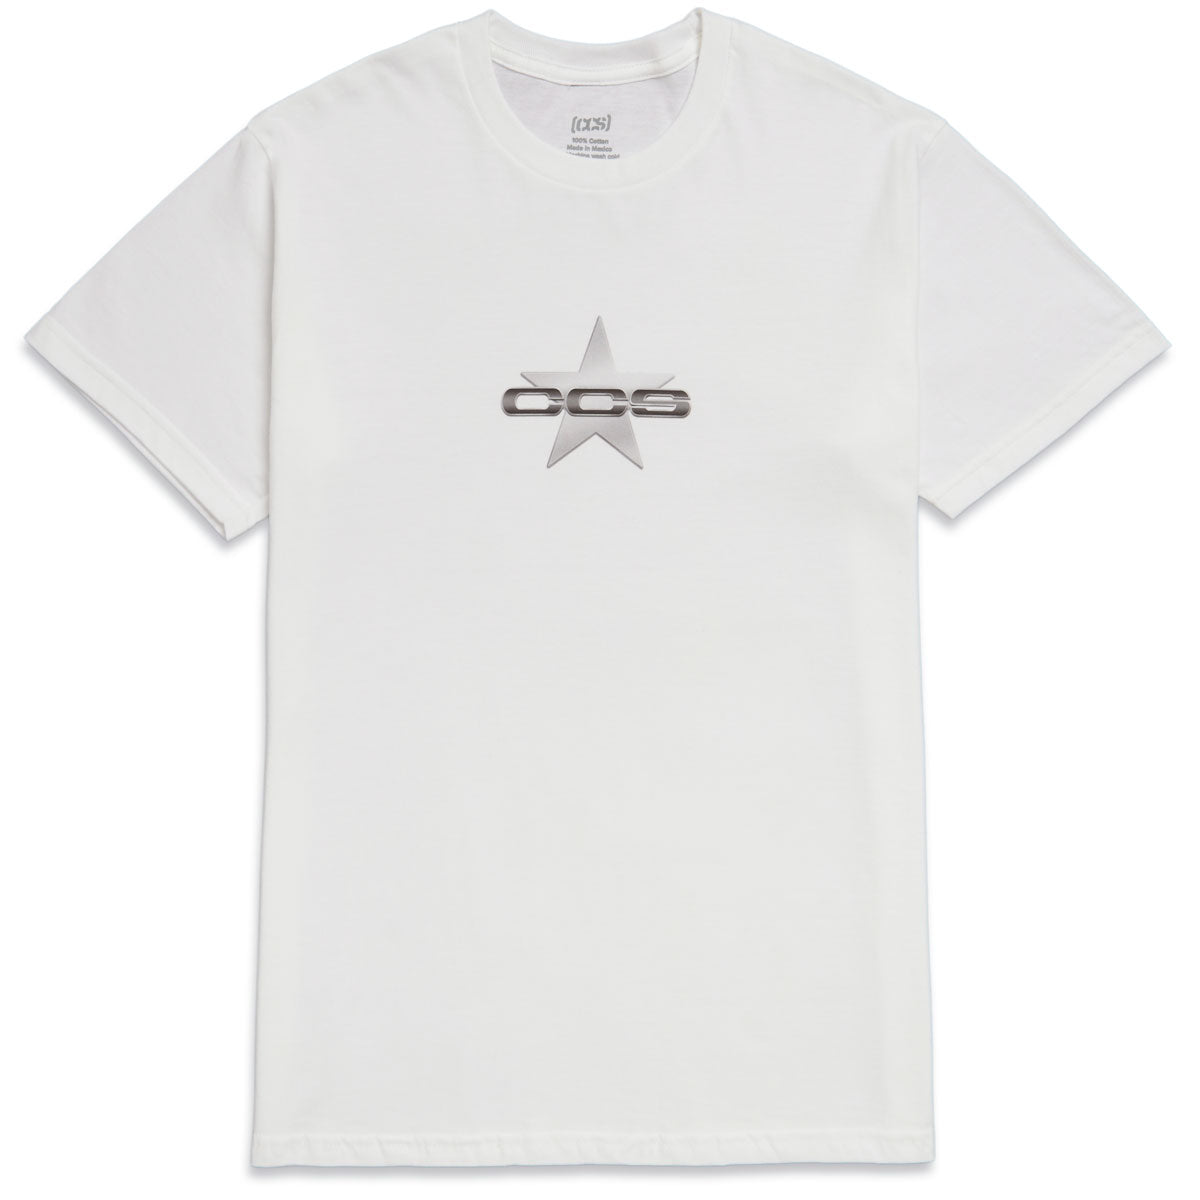 CCS 97 Star T-Shirt - White - MD image 1